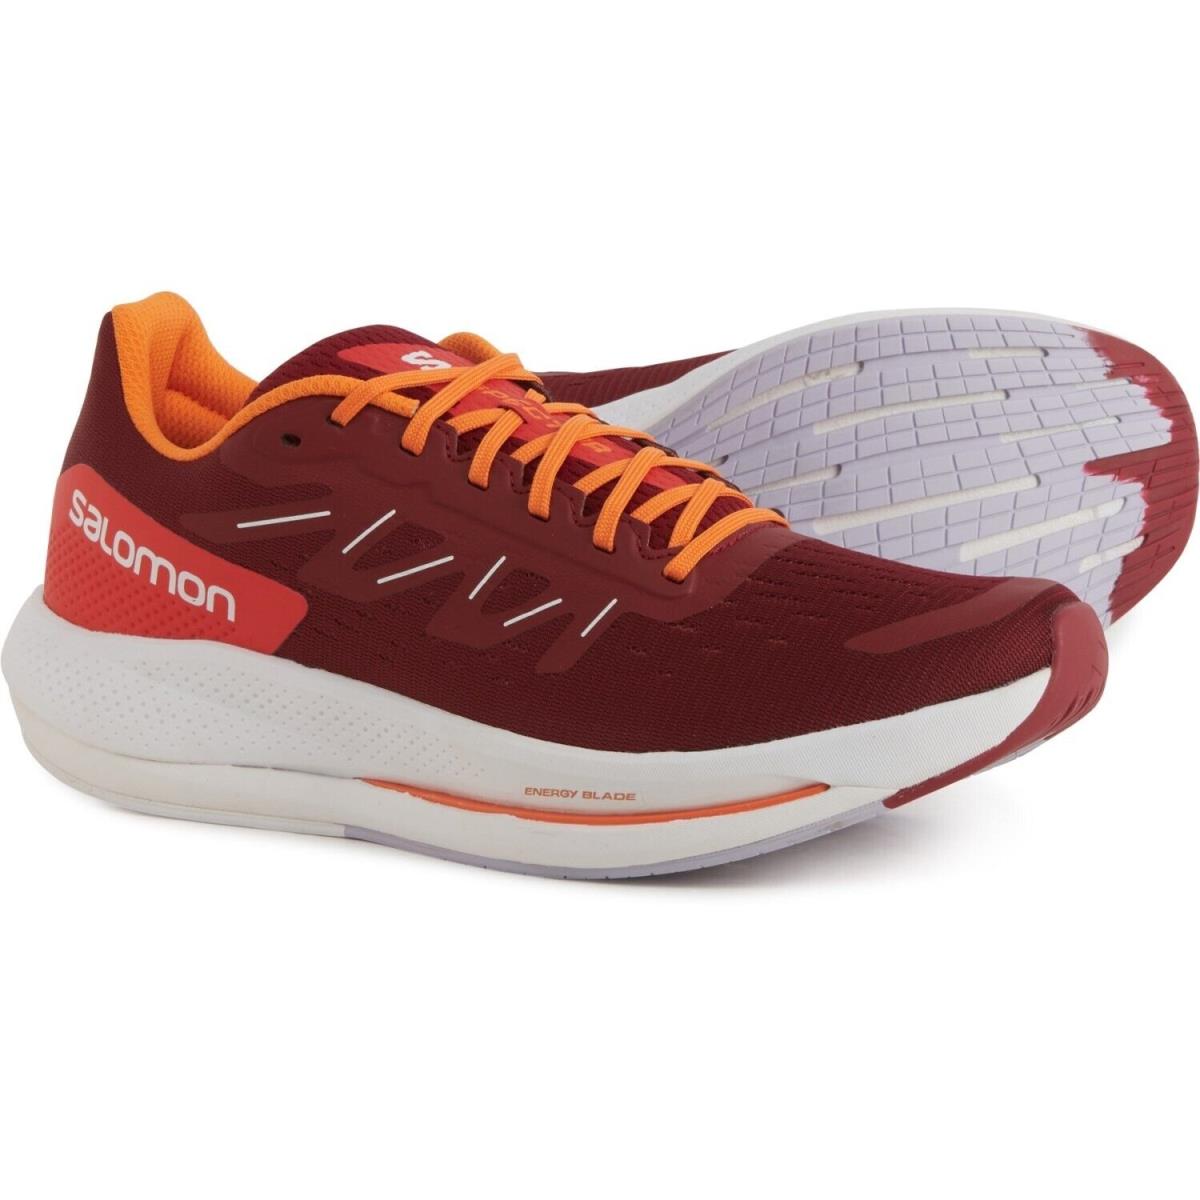 Salomon Spectur Running Shoes For Men Size 14